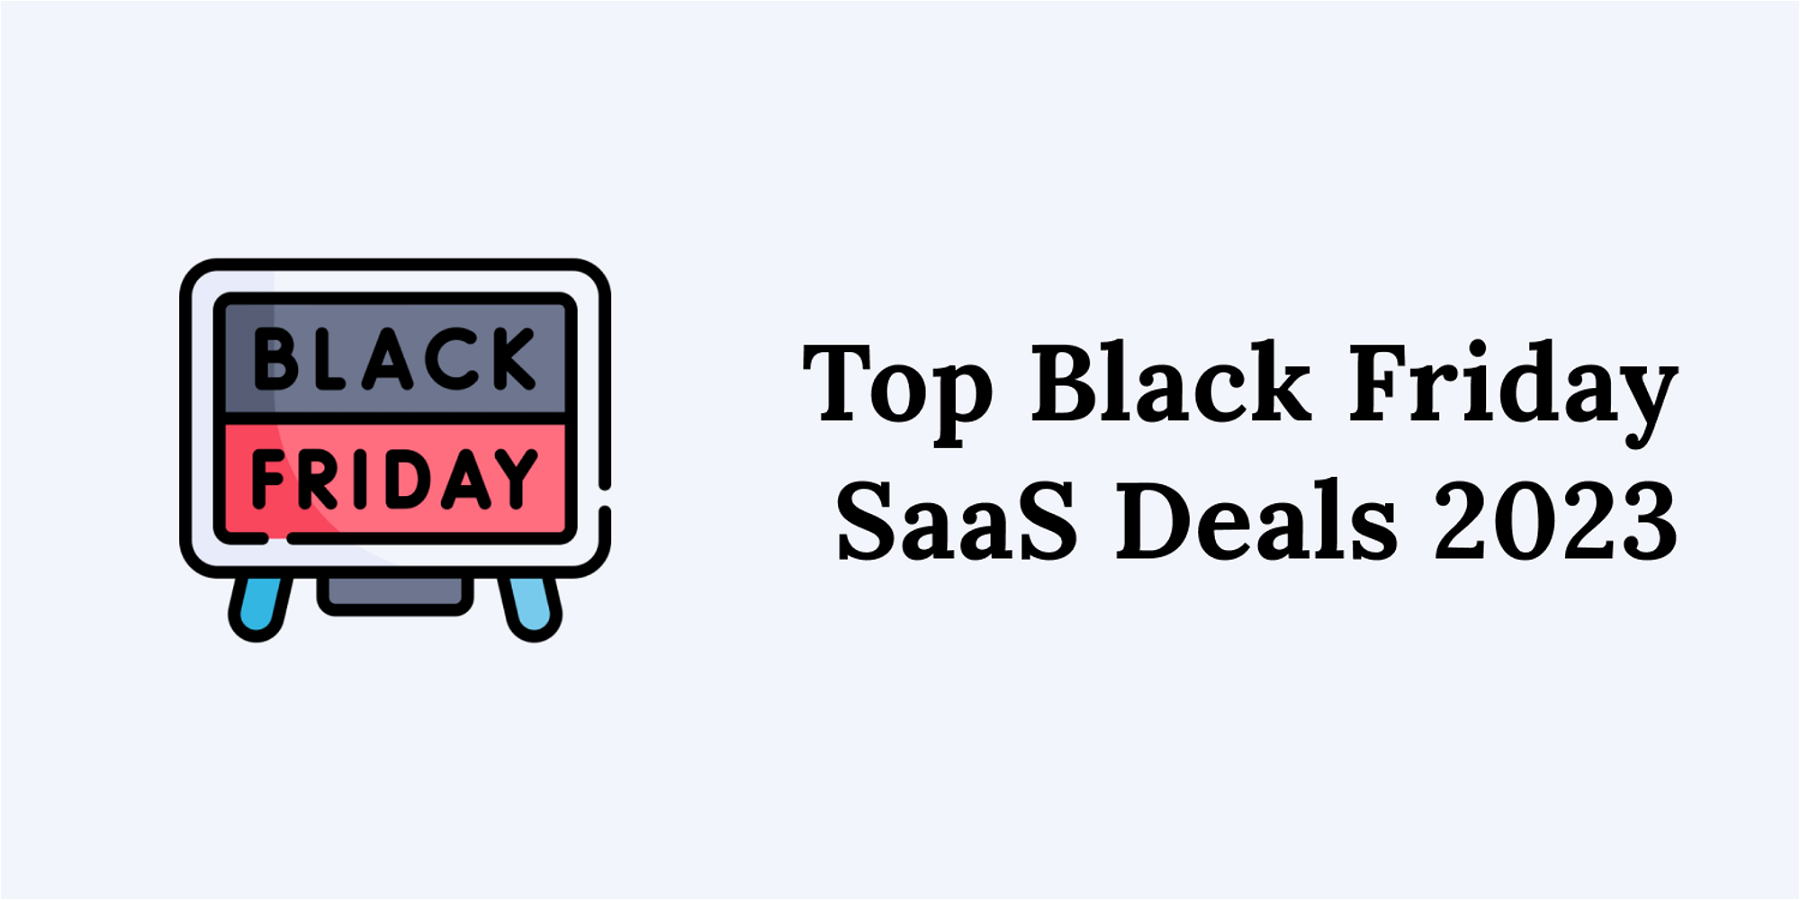 Top black friday SaaS deals of 2023